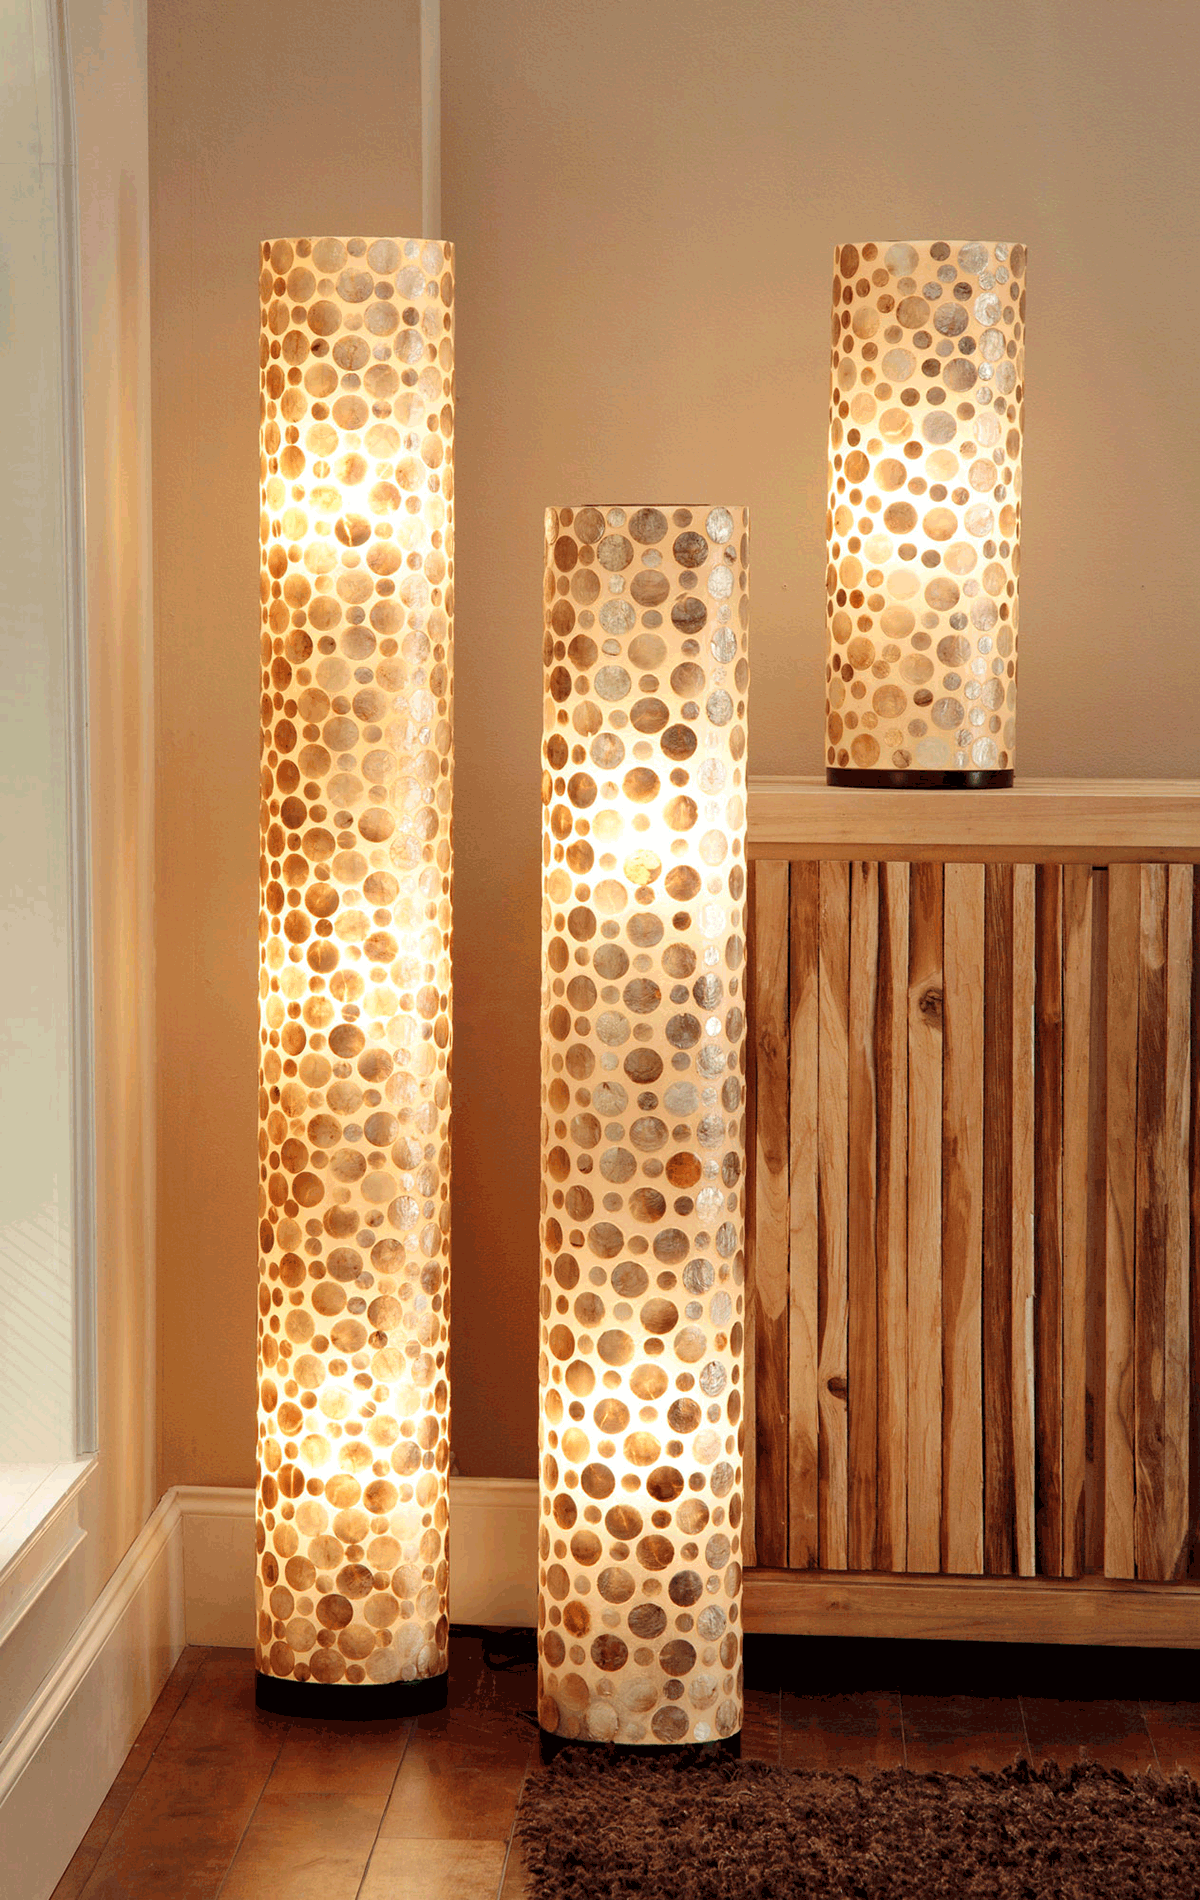 Decorative lamps - 10 ways to renew your home | Warisan Lighting